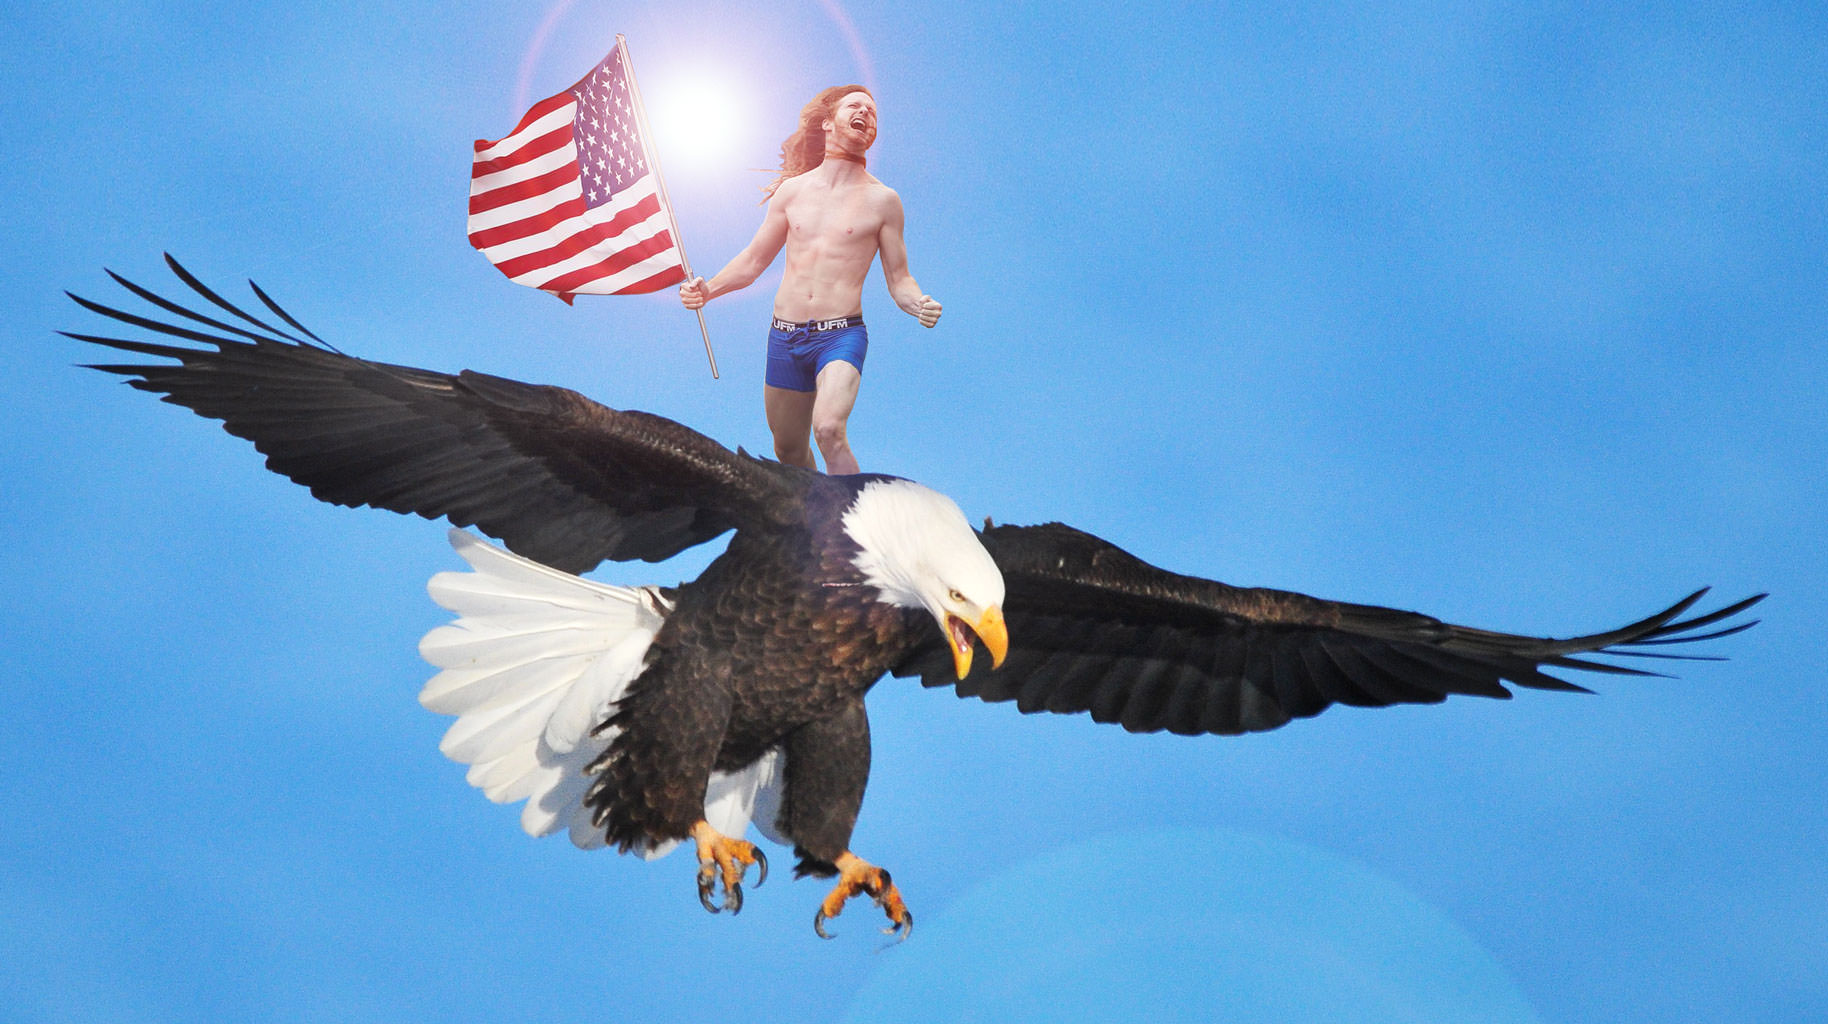 My original version of “Patriotic Underwear Guy on Giant Bald Eagle”